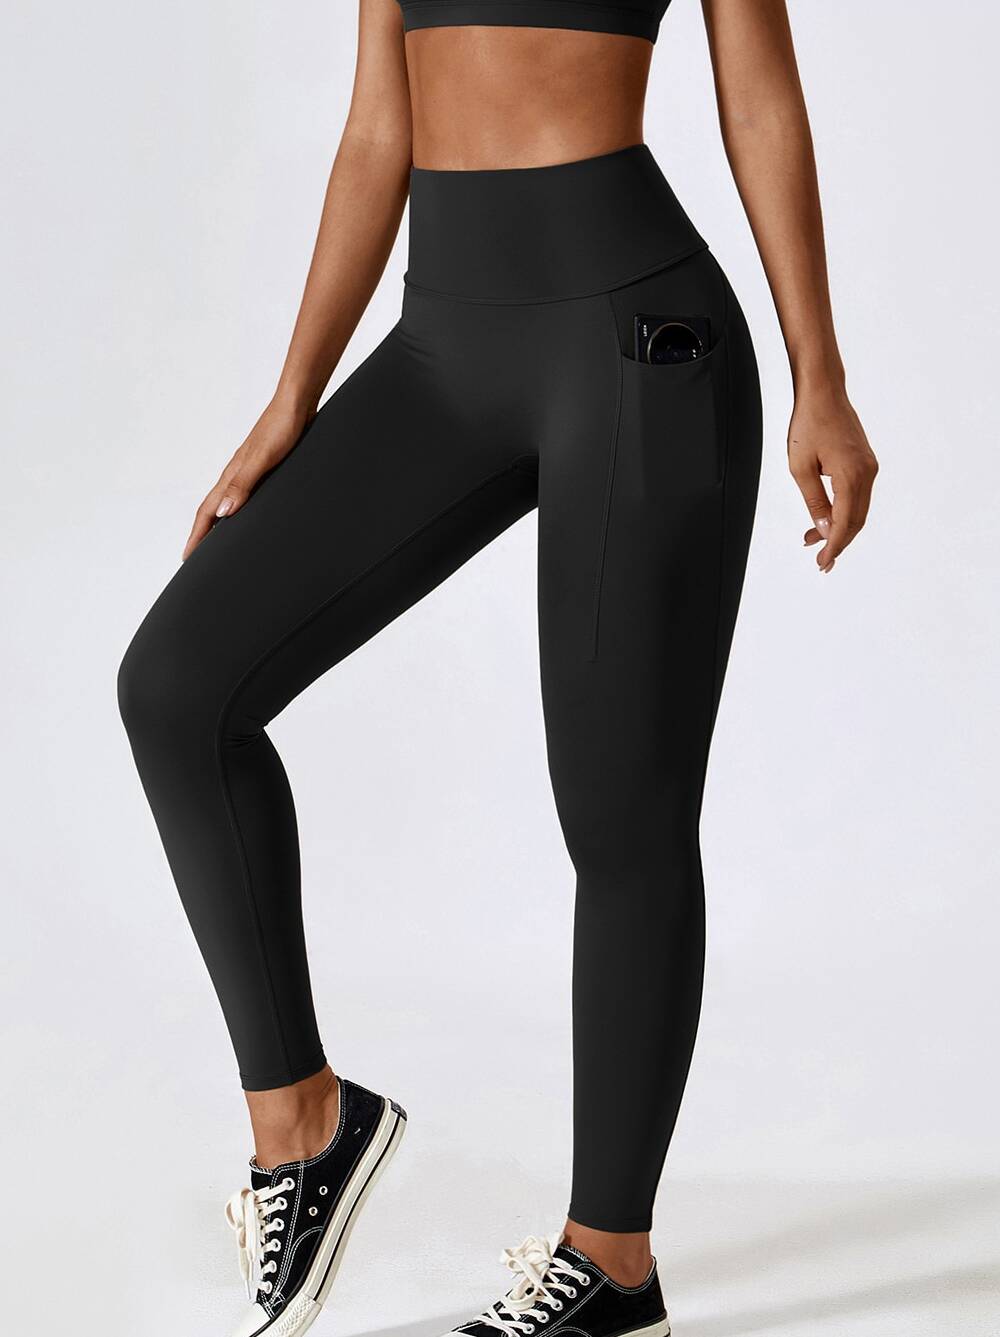 High-Waisted Yoga Pants with 2 Side Pockets • Value Yoga